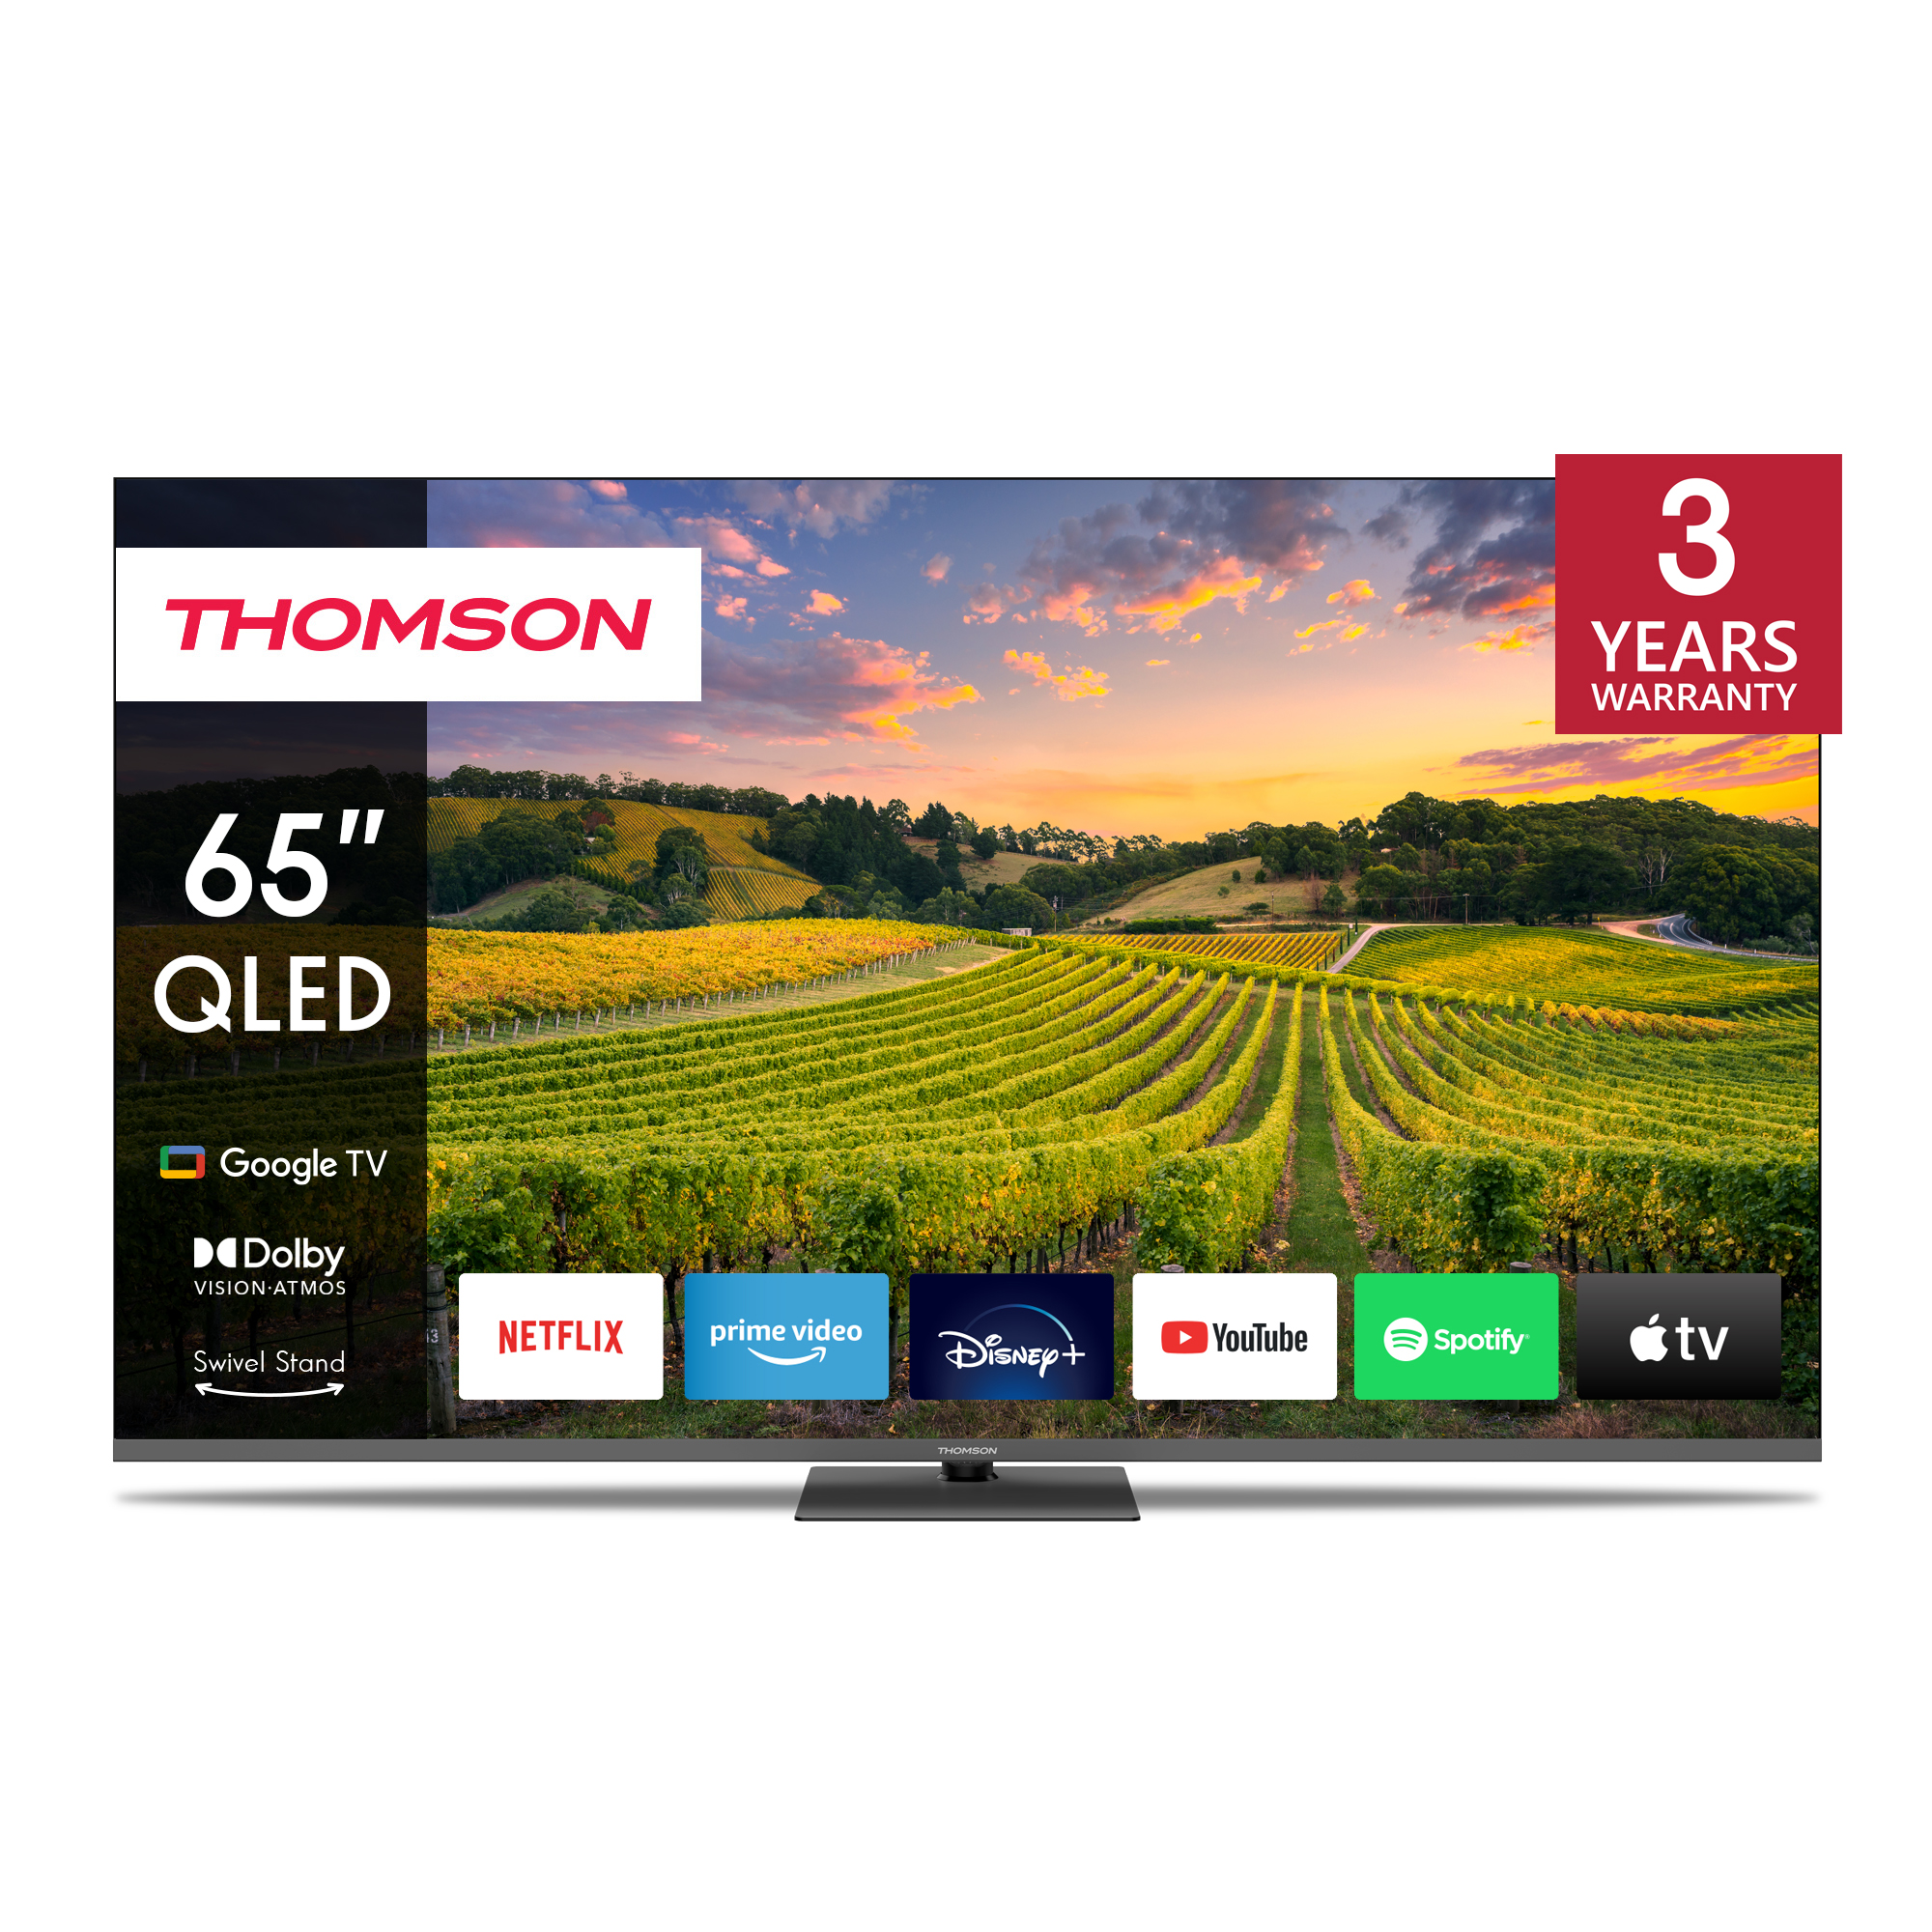 Thomson 65QG5C14 QLED Google TV